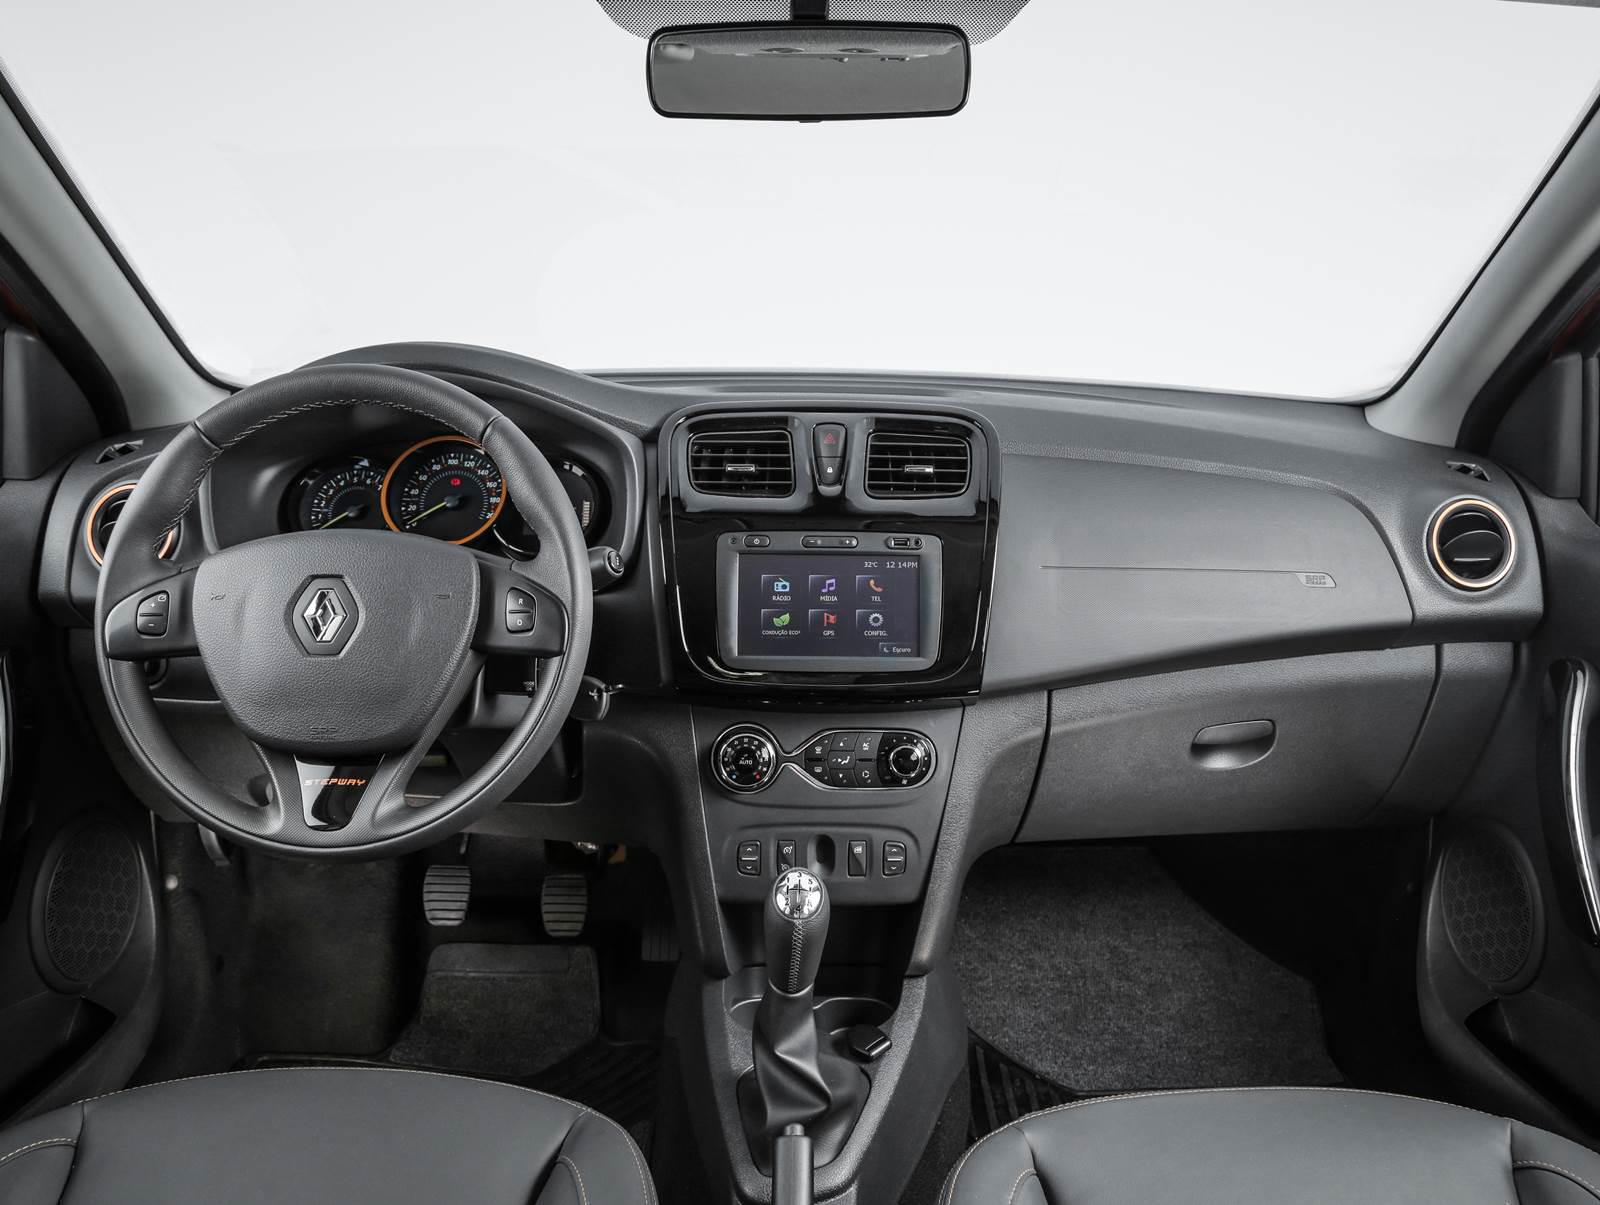 Renault Sandero Stepway 2015 - interior - painel